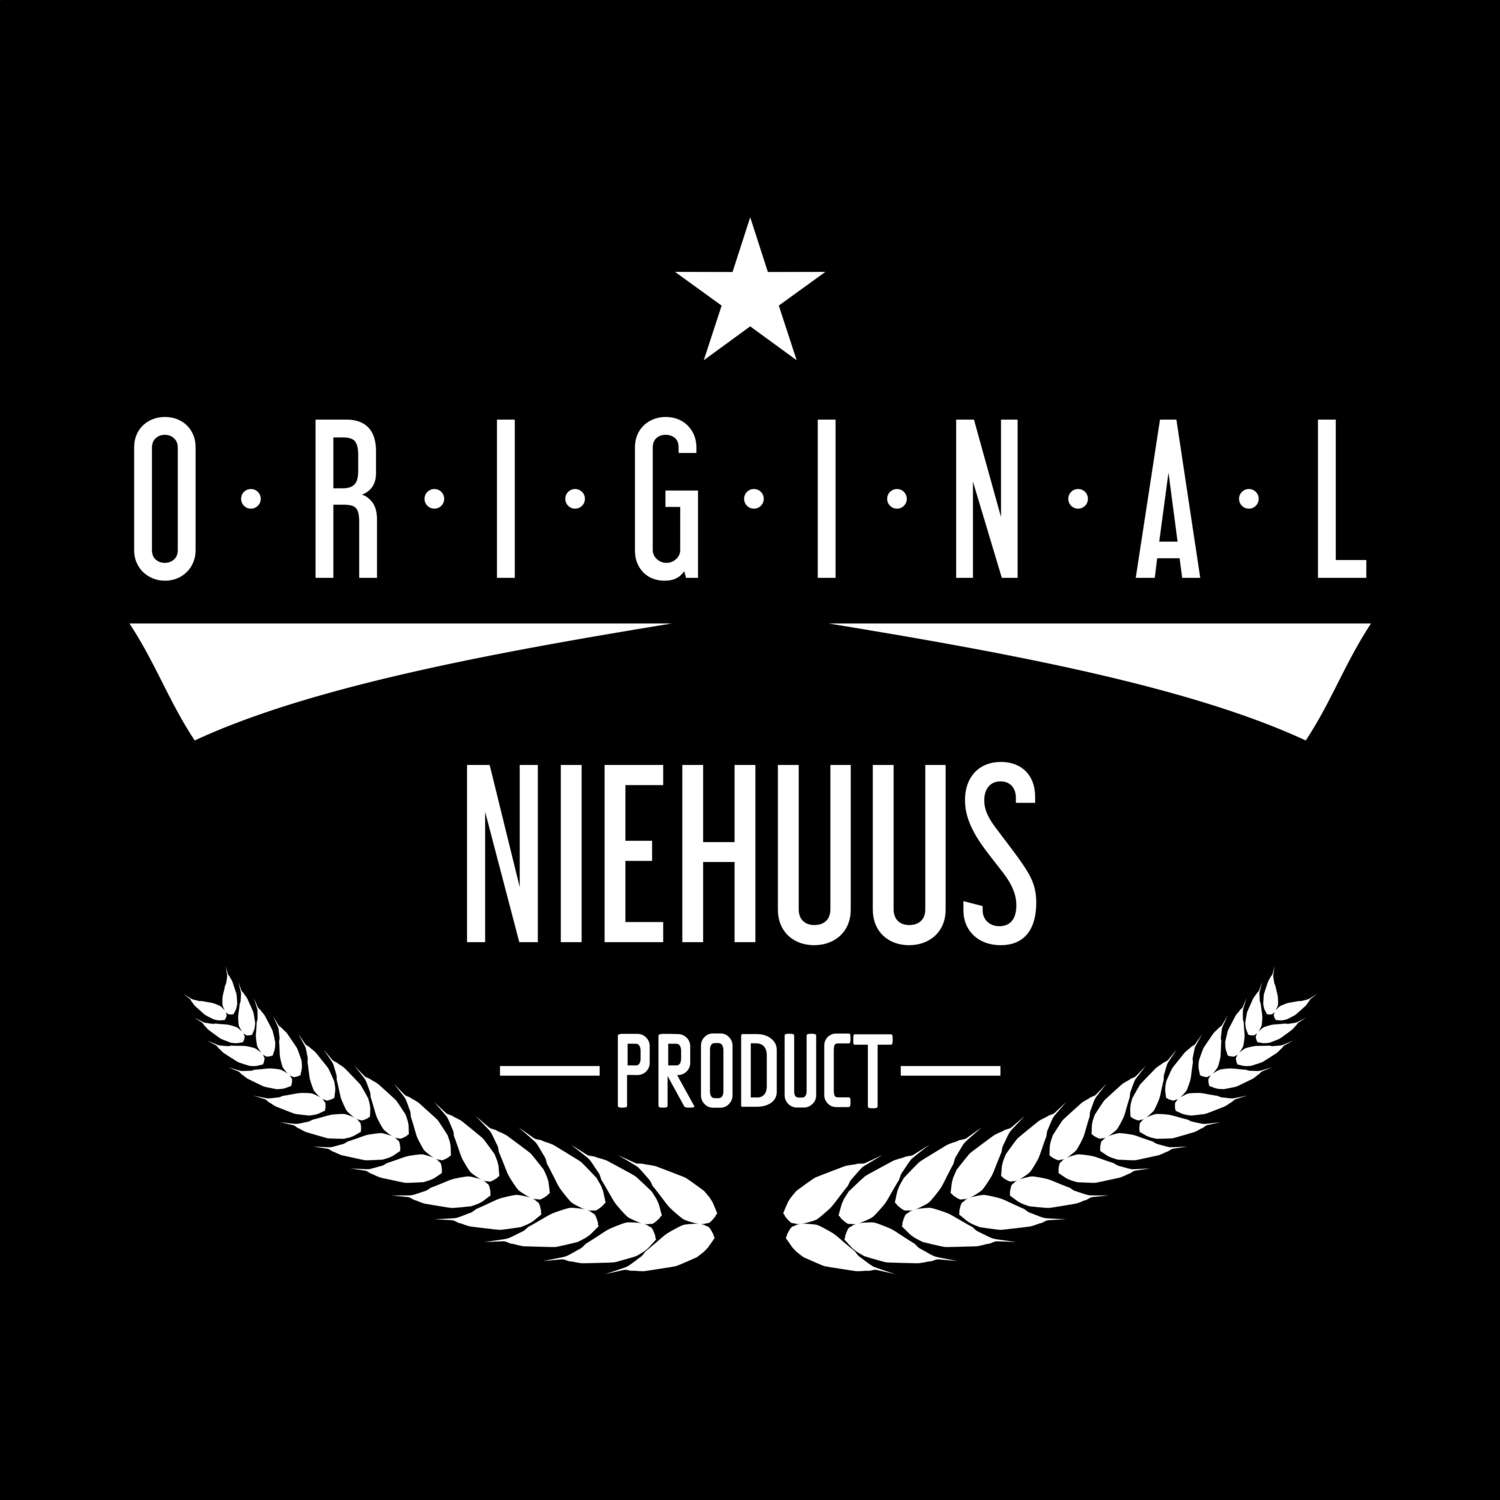 Niehuus T-Shirt »Original Product«